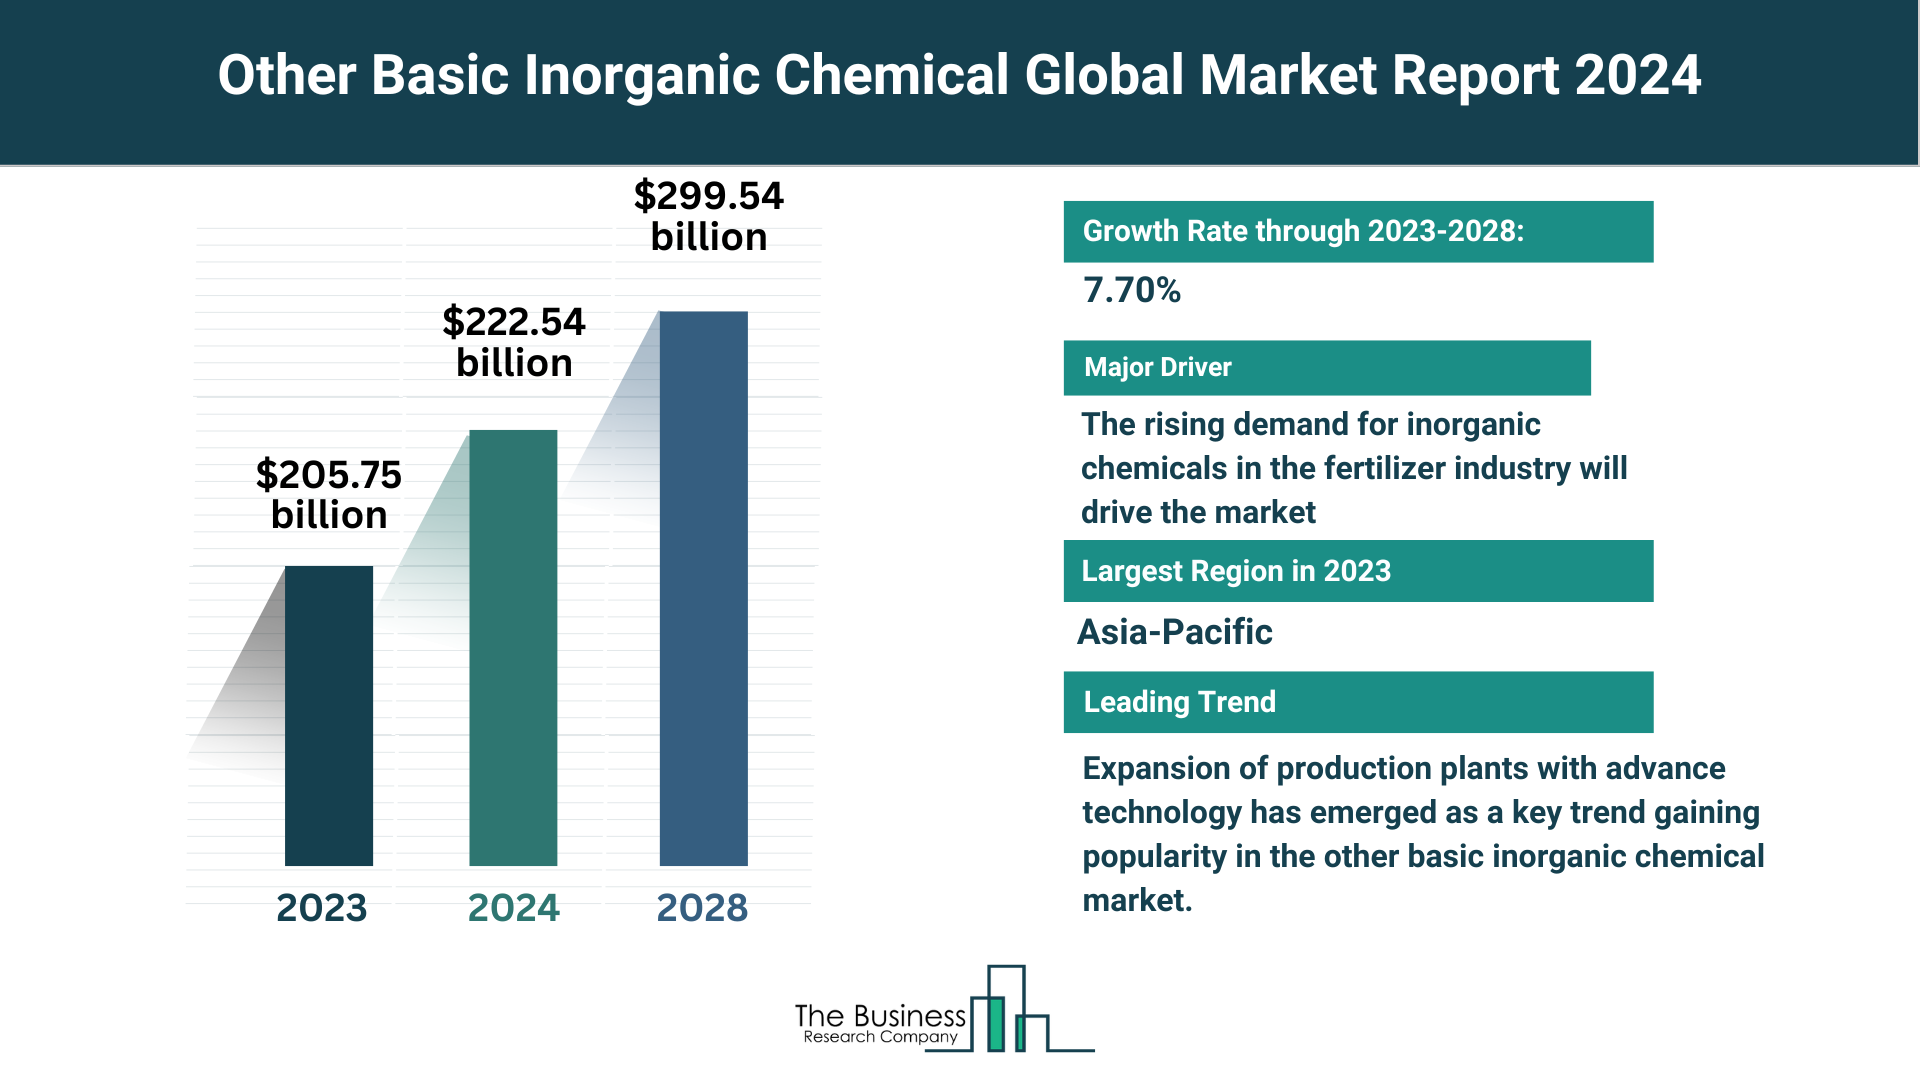 Global Other Basic Inorganic Chemical Market